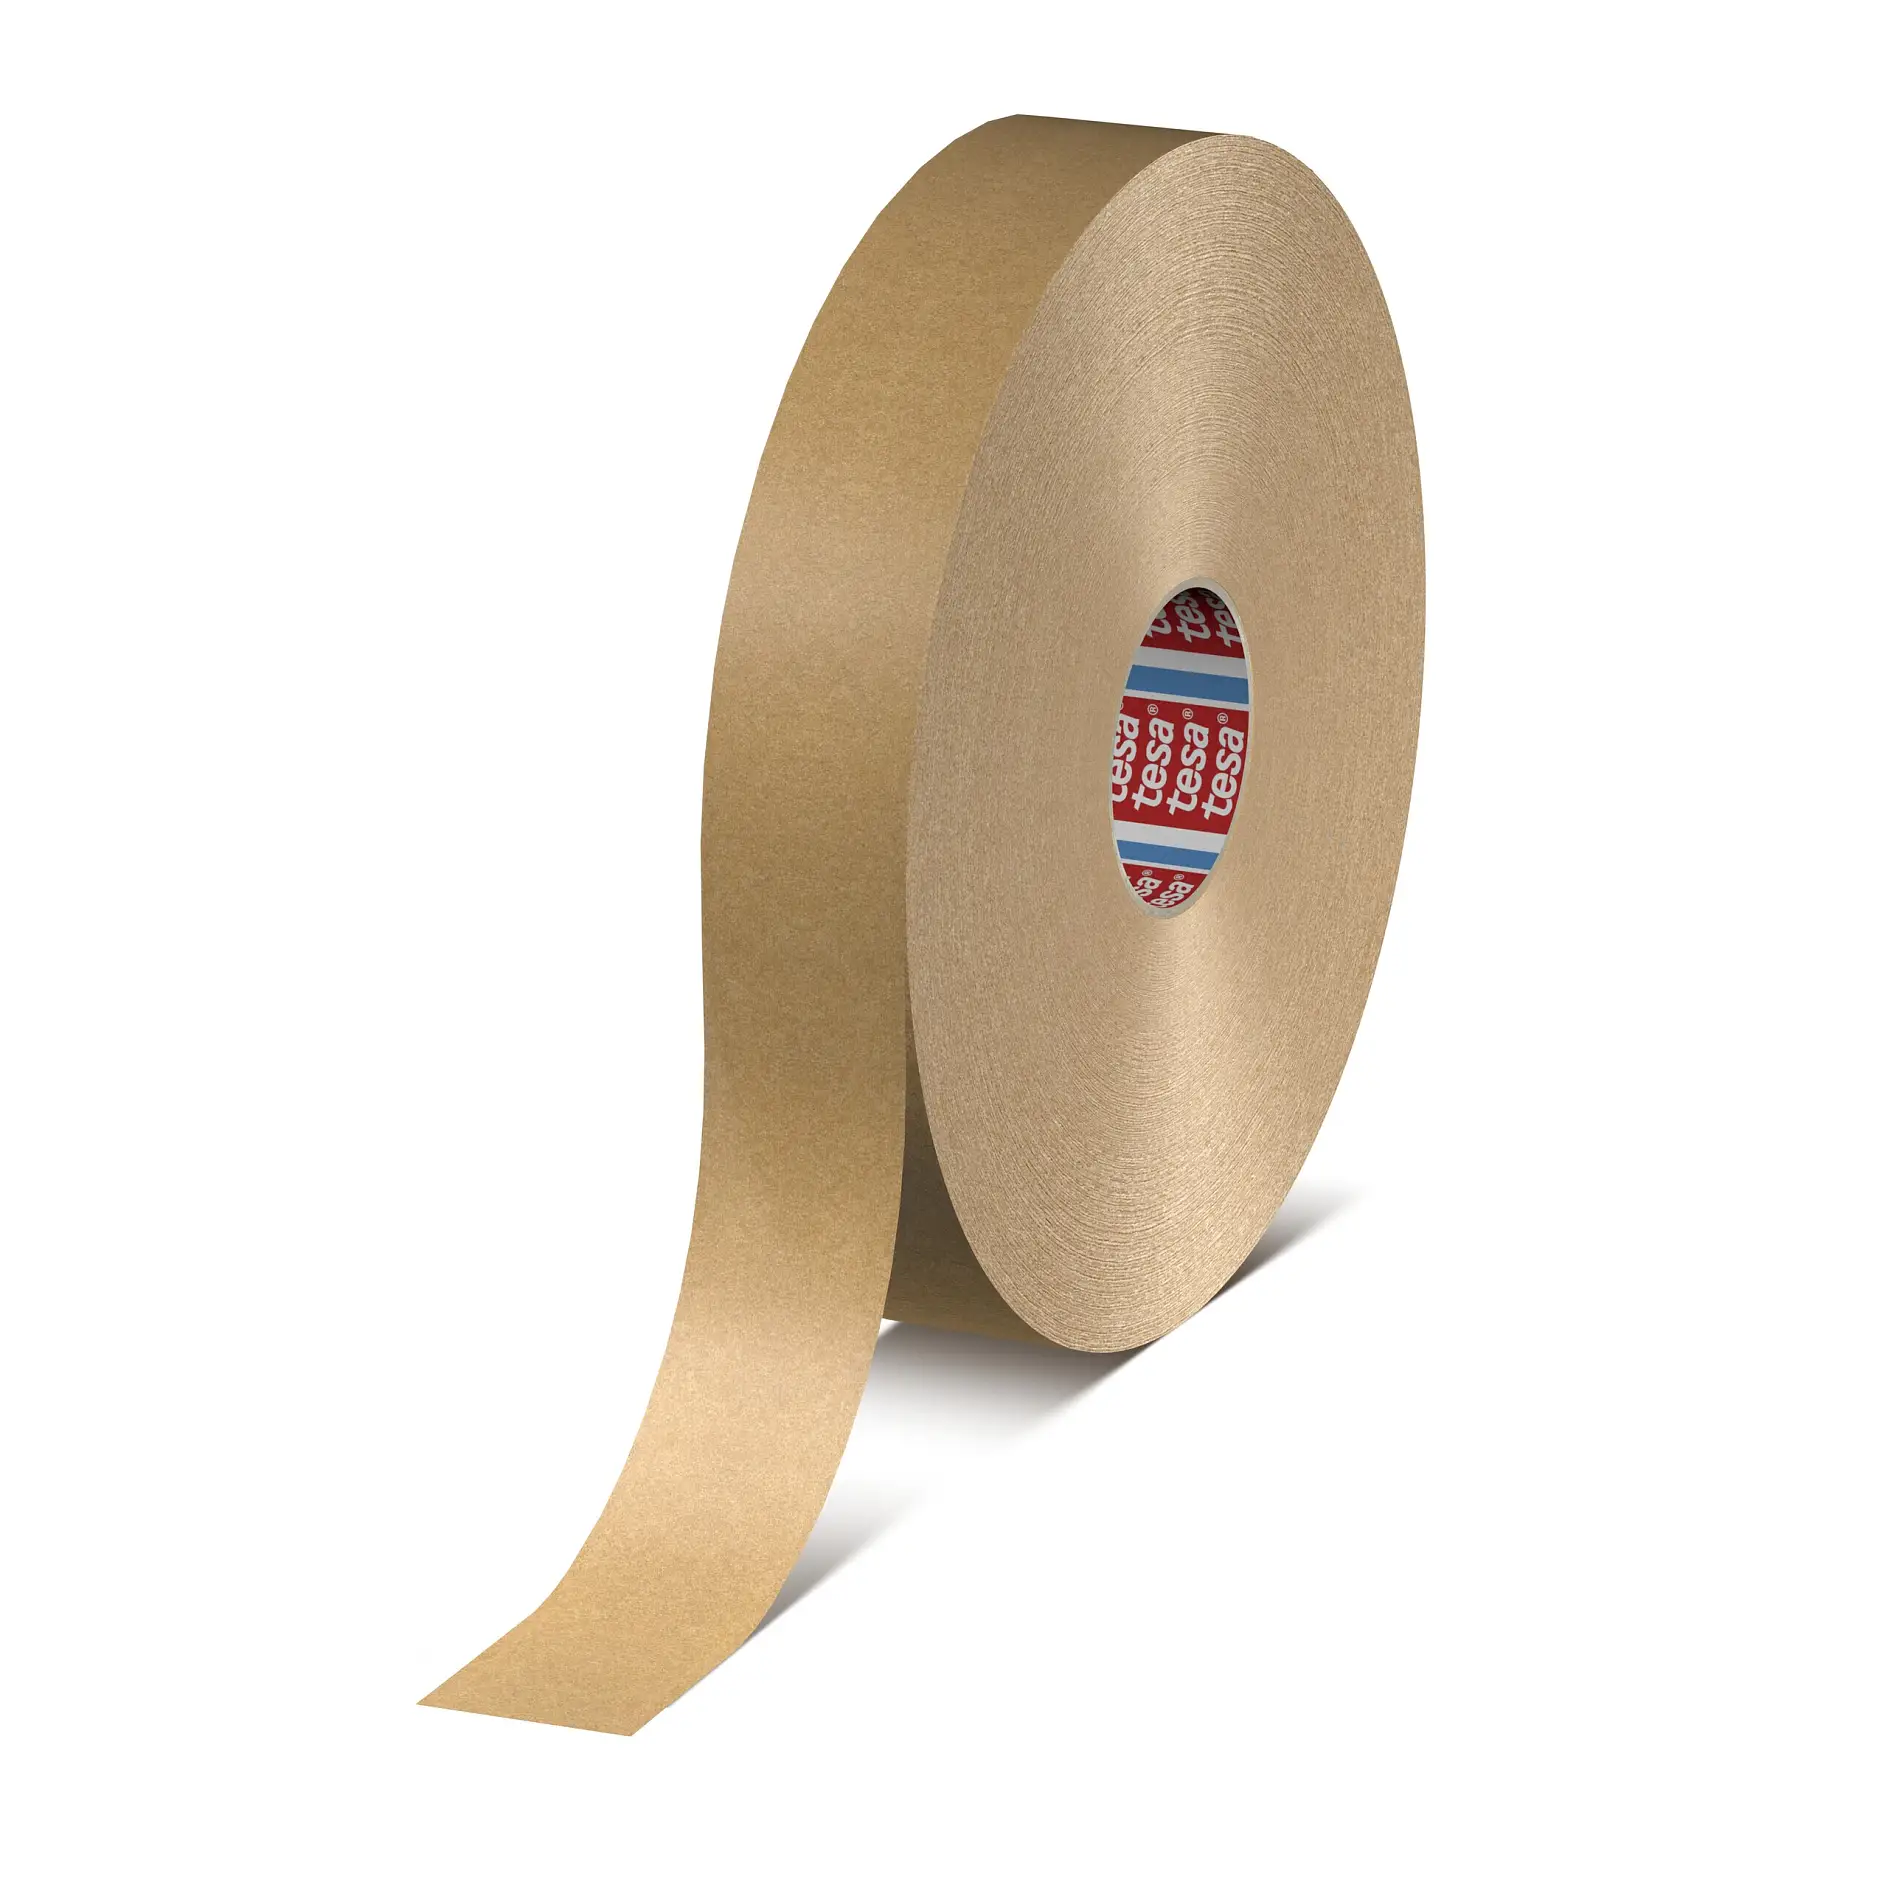 tesa-4713-paper-carton-sealing-tape-chamois-47130000200-pr